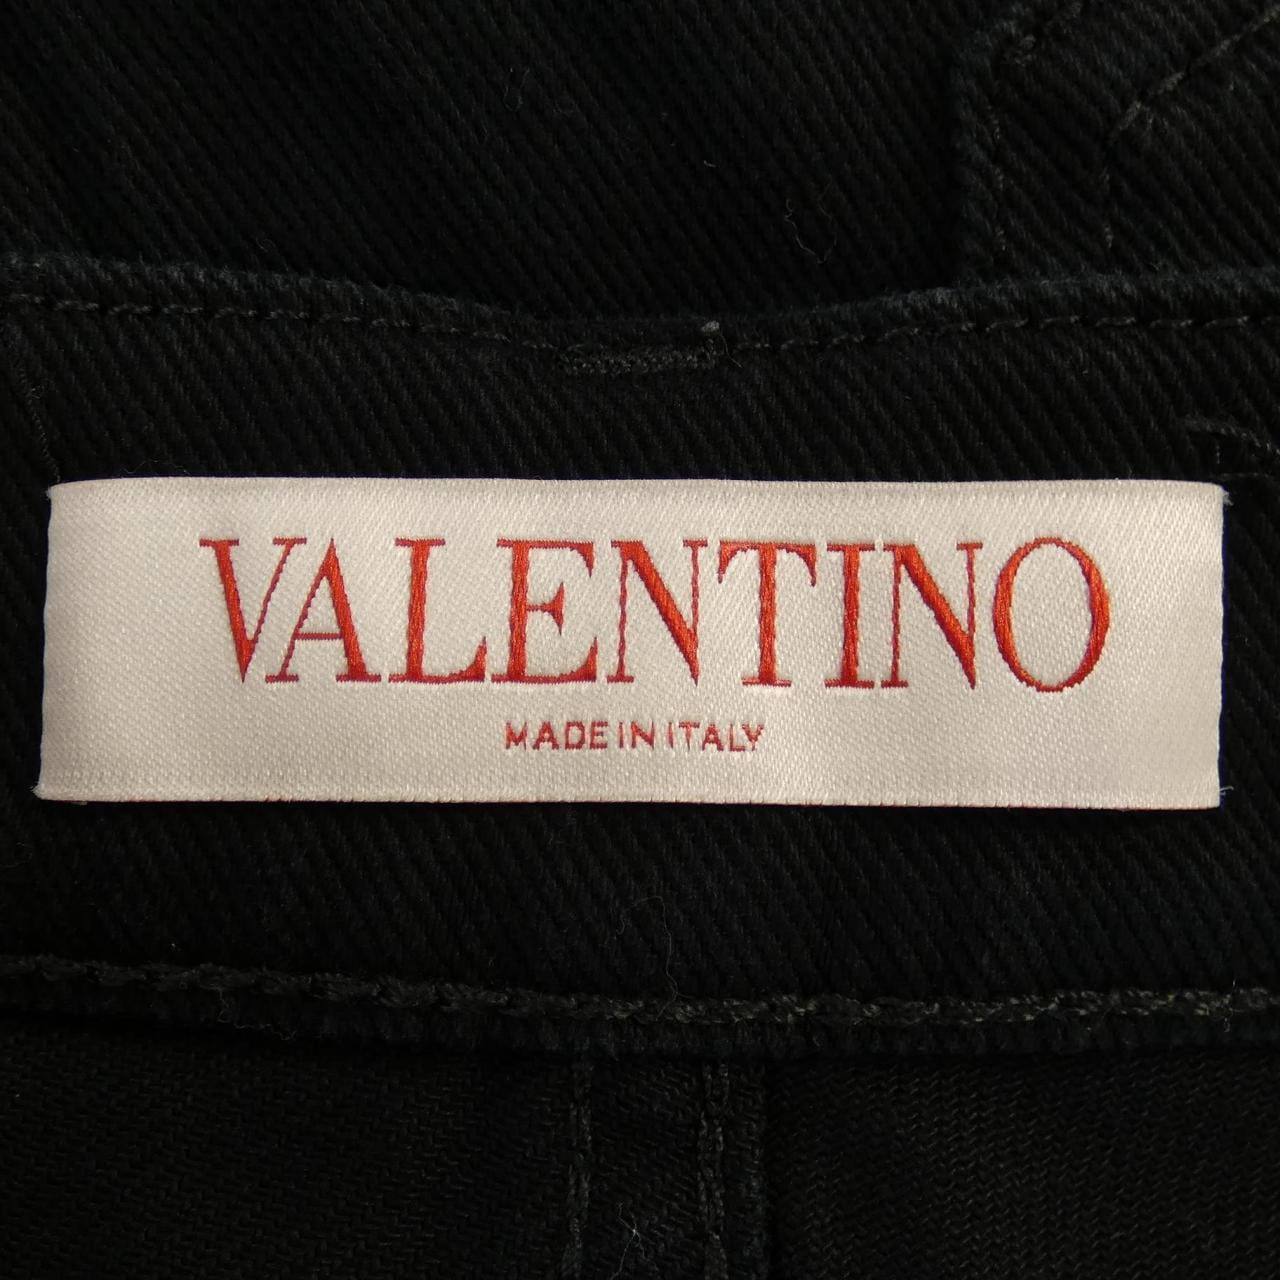 VALENTINO范伦铁诺牛仔裤